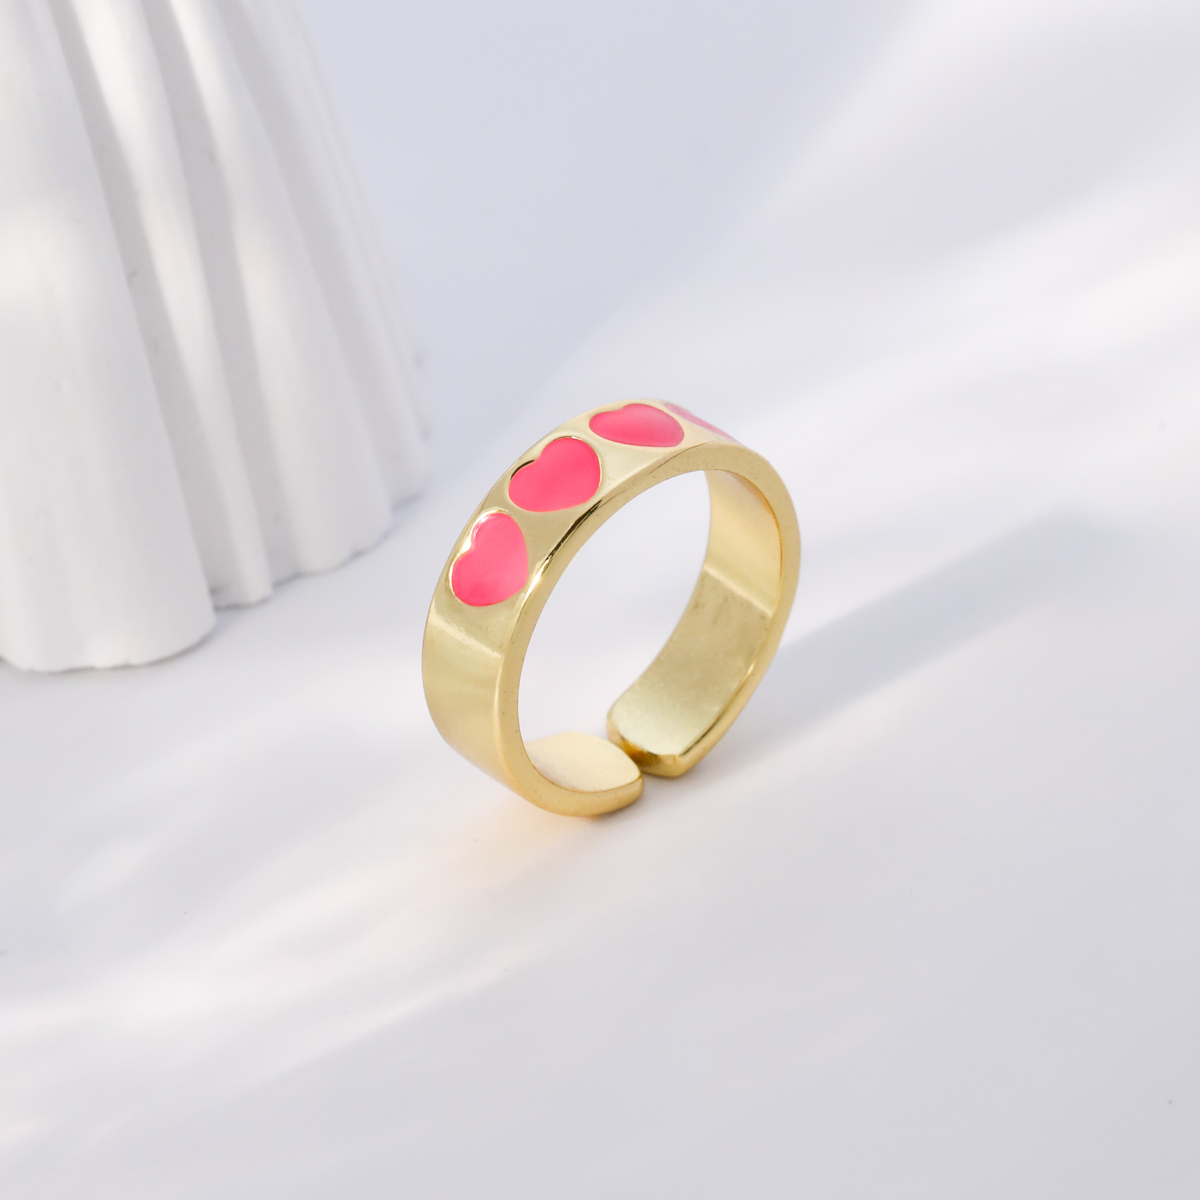 Mode Herzform Kupfer Offener Ring Emaille Vergoldet Kupfer Ringe 1 Stckpicture4